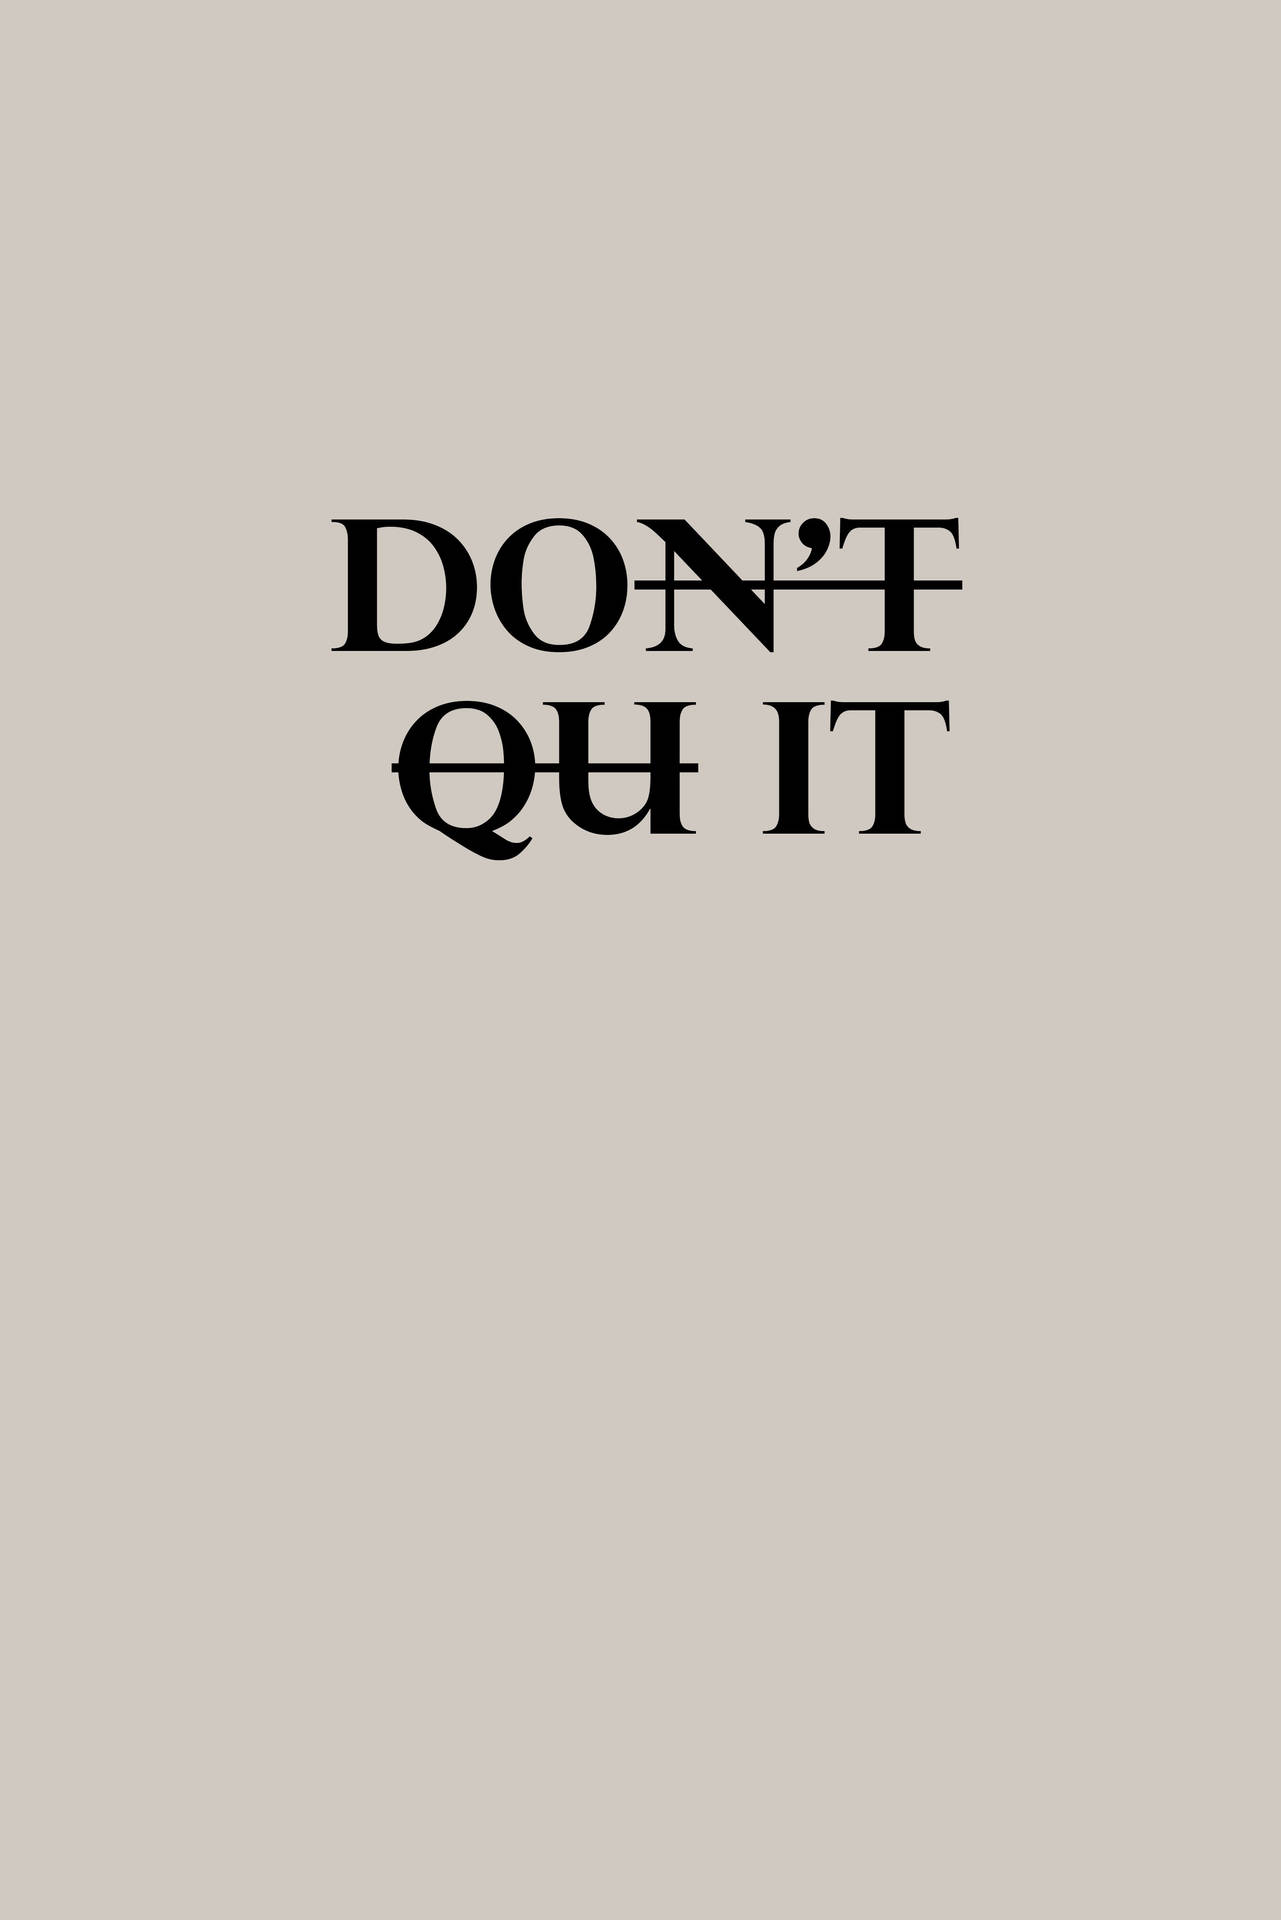 Don't Quit Minimalistic Cute Positive Quotes Wallpaper